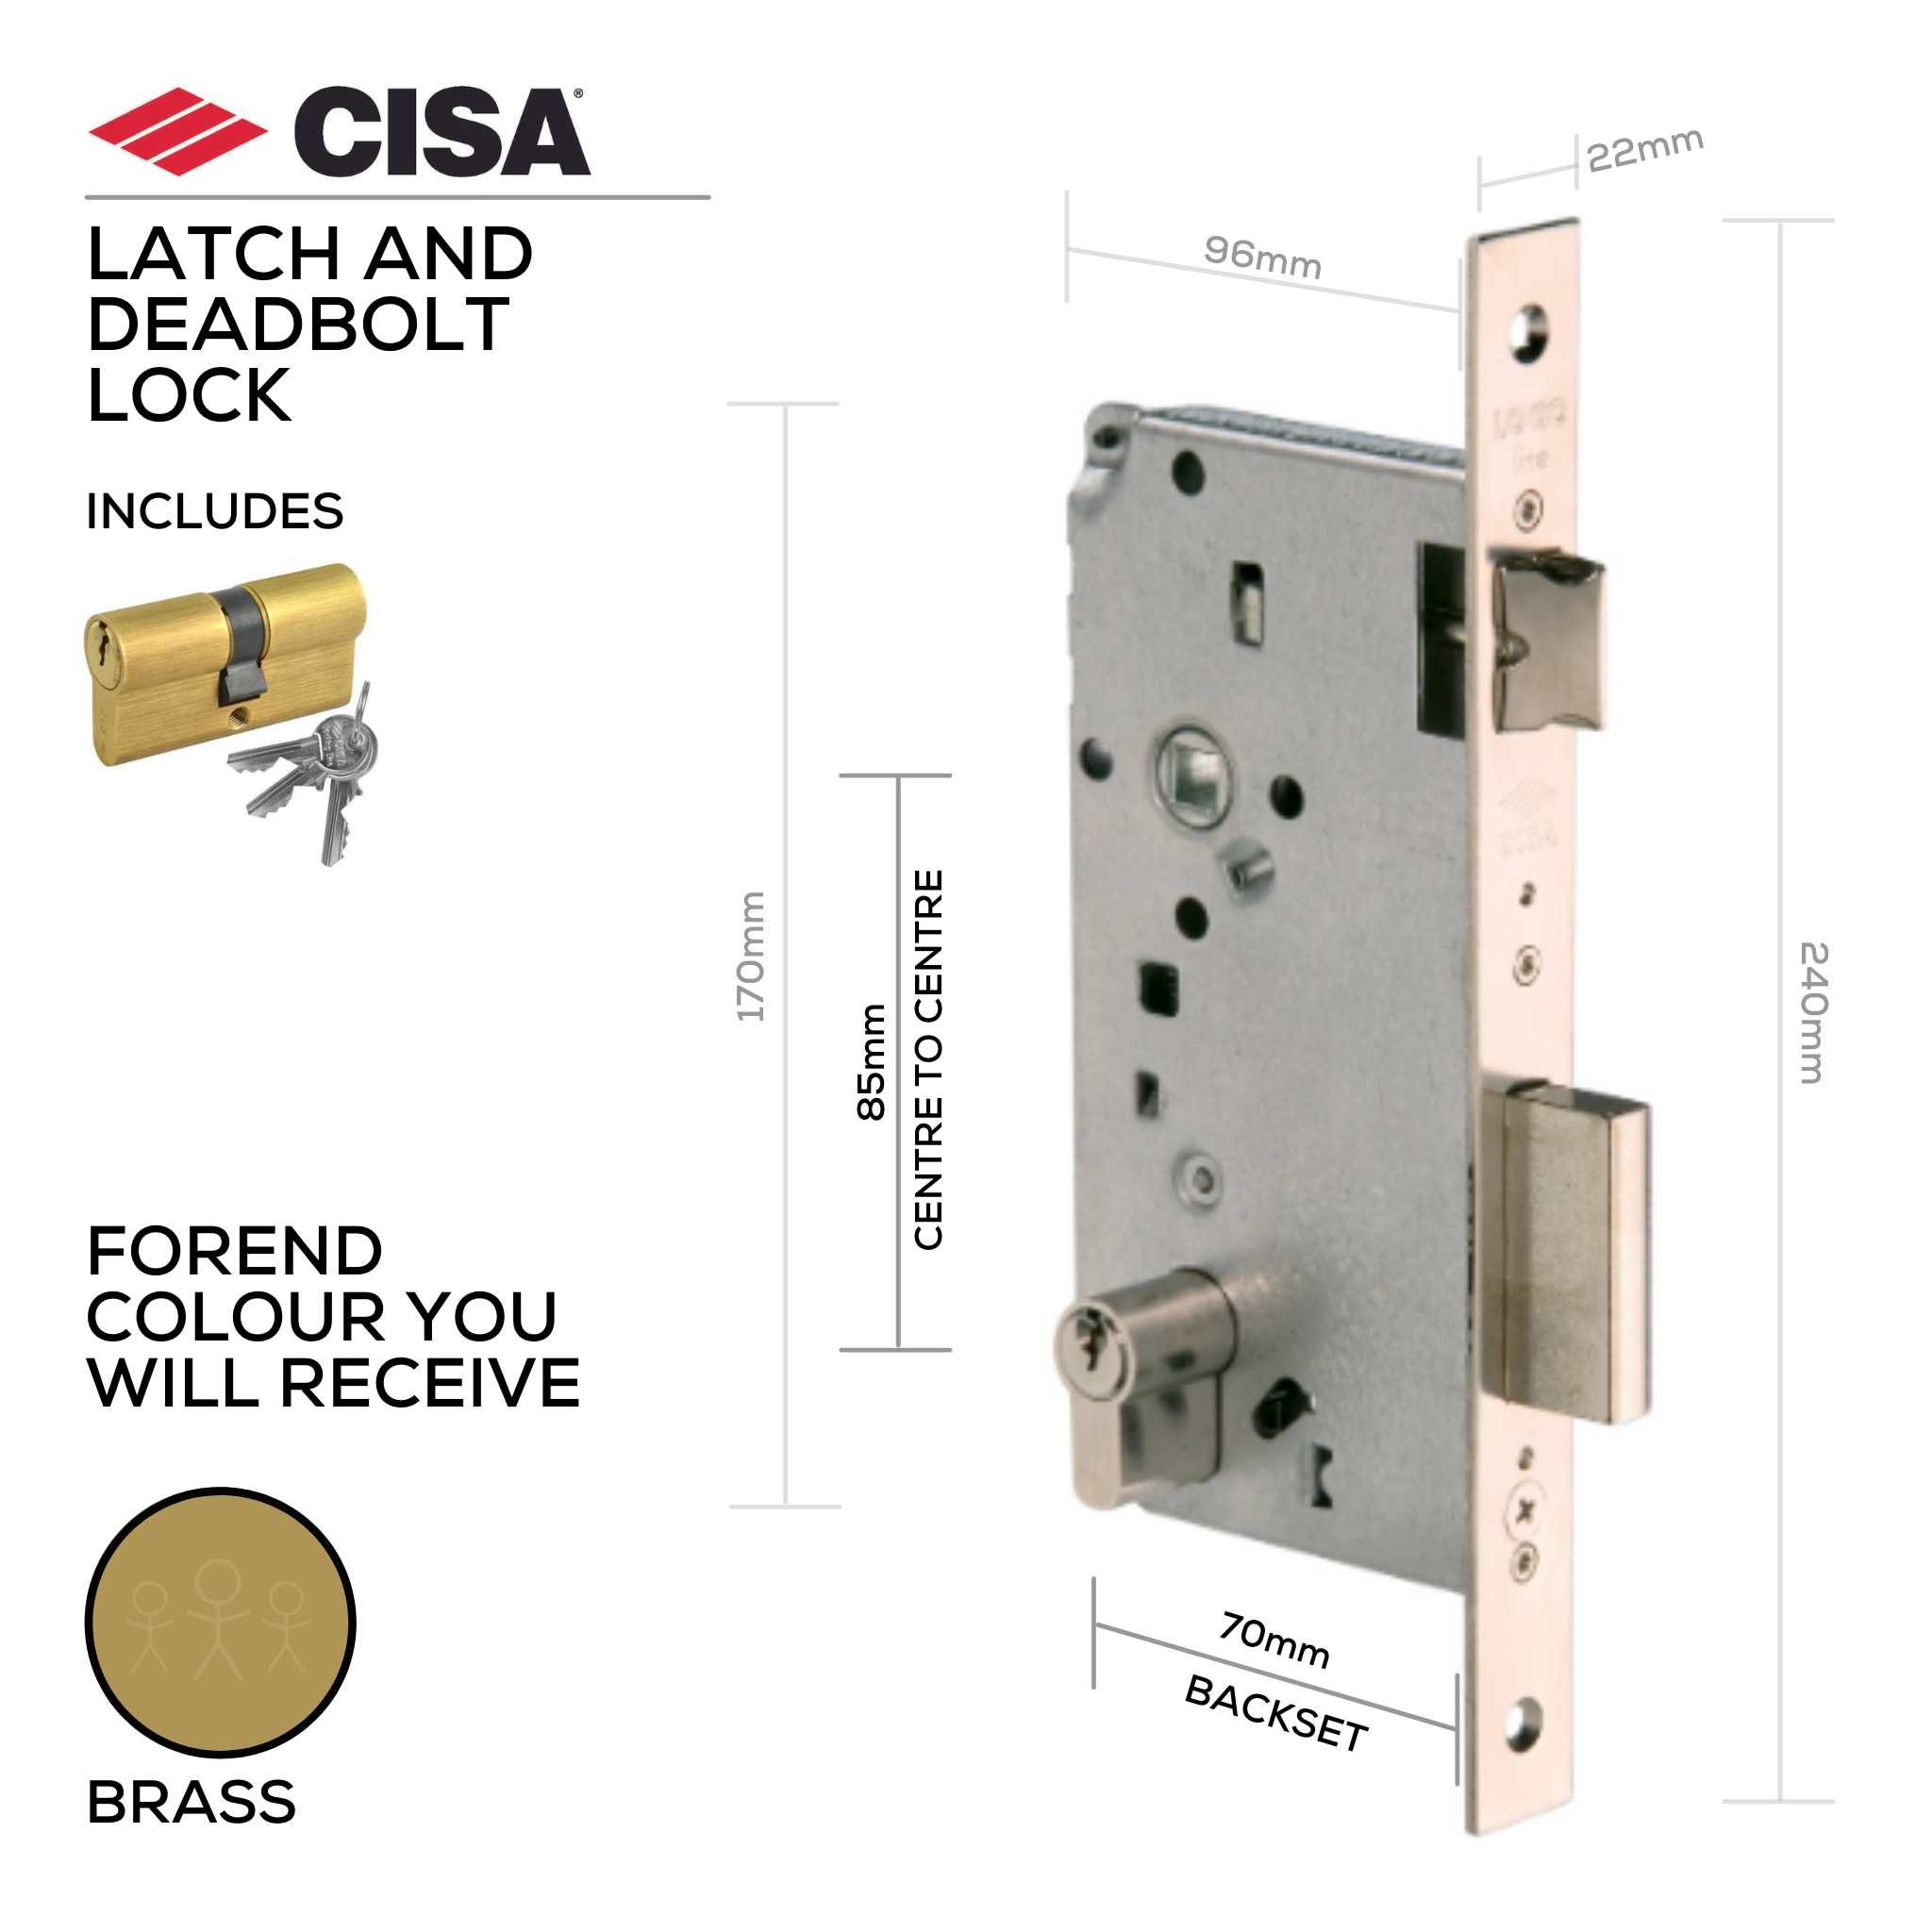 5C611-70-00_W/Cylinder, Latch & Deadbolt Lock, Euro Cylinder, Including Cylinder, 08010-07, 3 Keys - 5 Pins, 70mm (Backset), 85mm (ctc), Brass, CISA